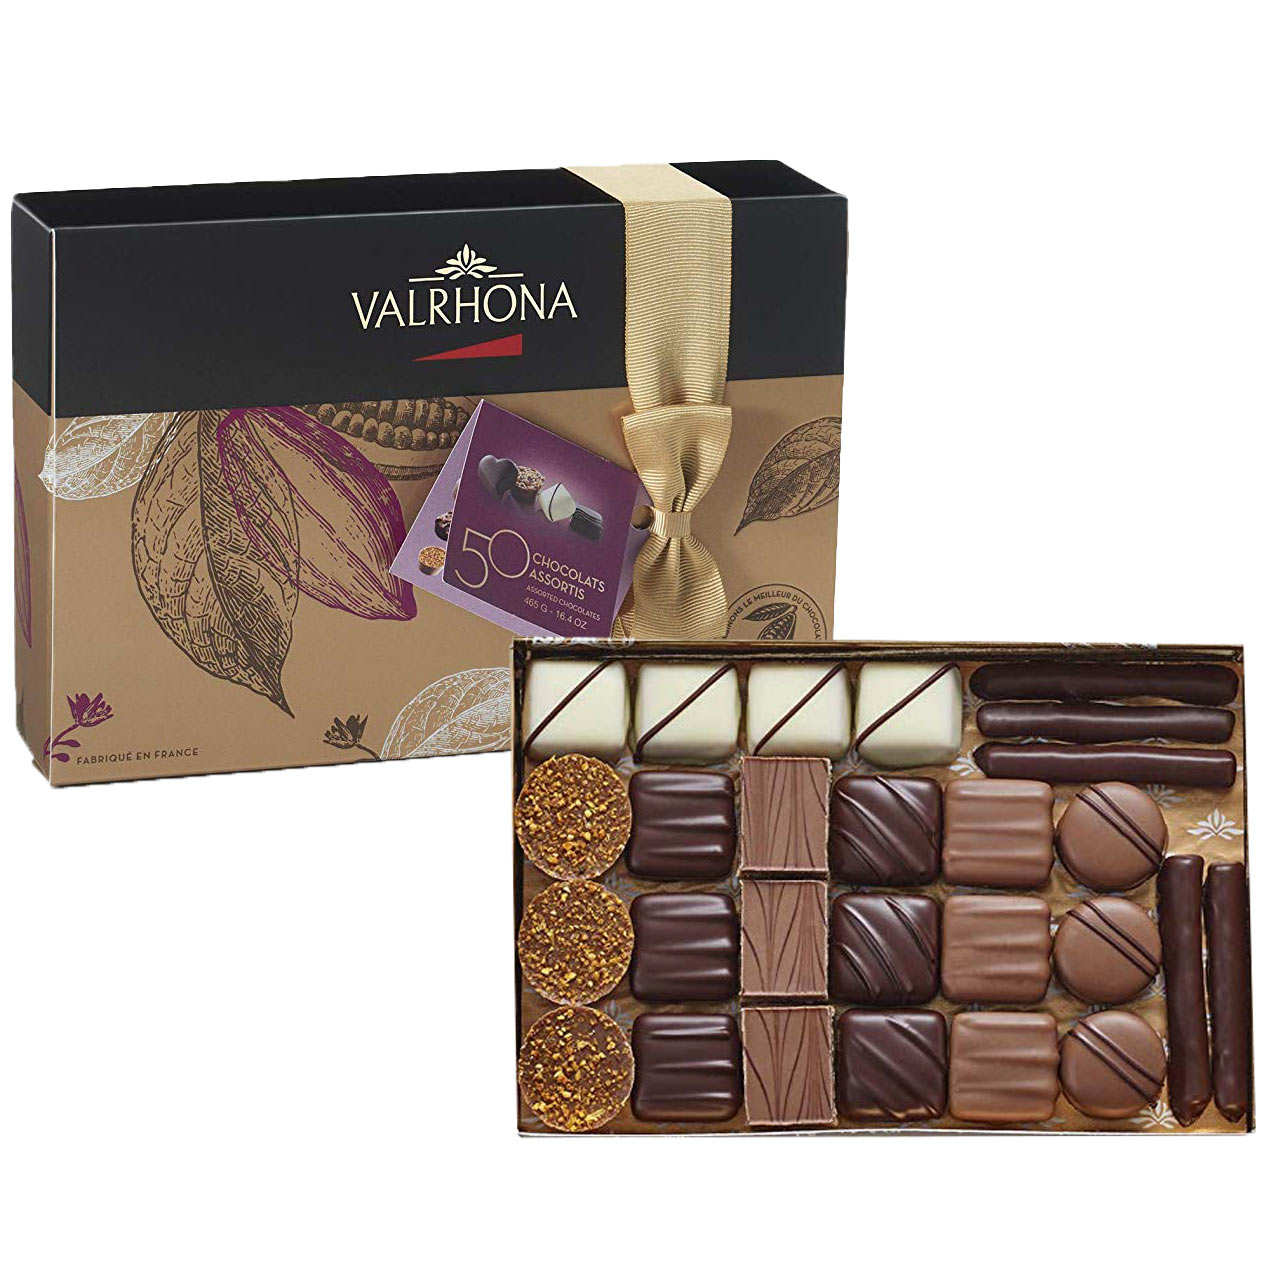 Assortment of 50 Chocolate by Valrhona